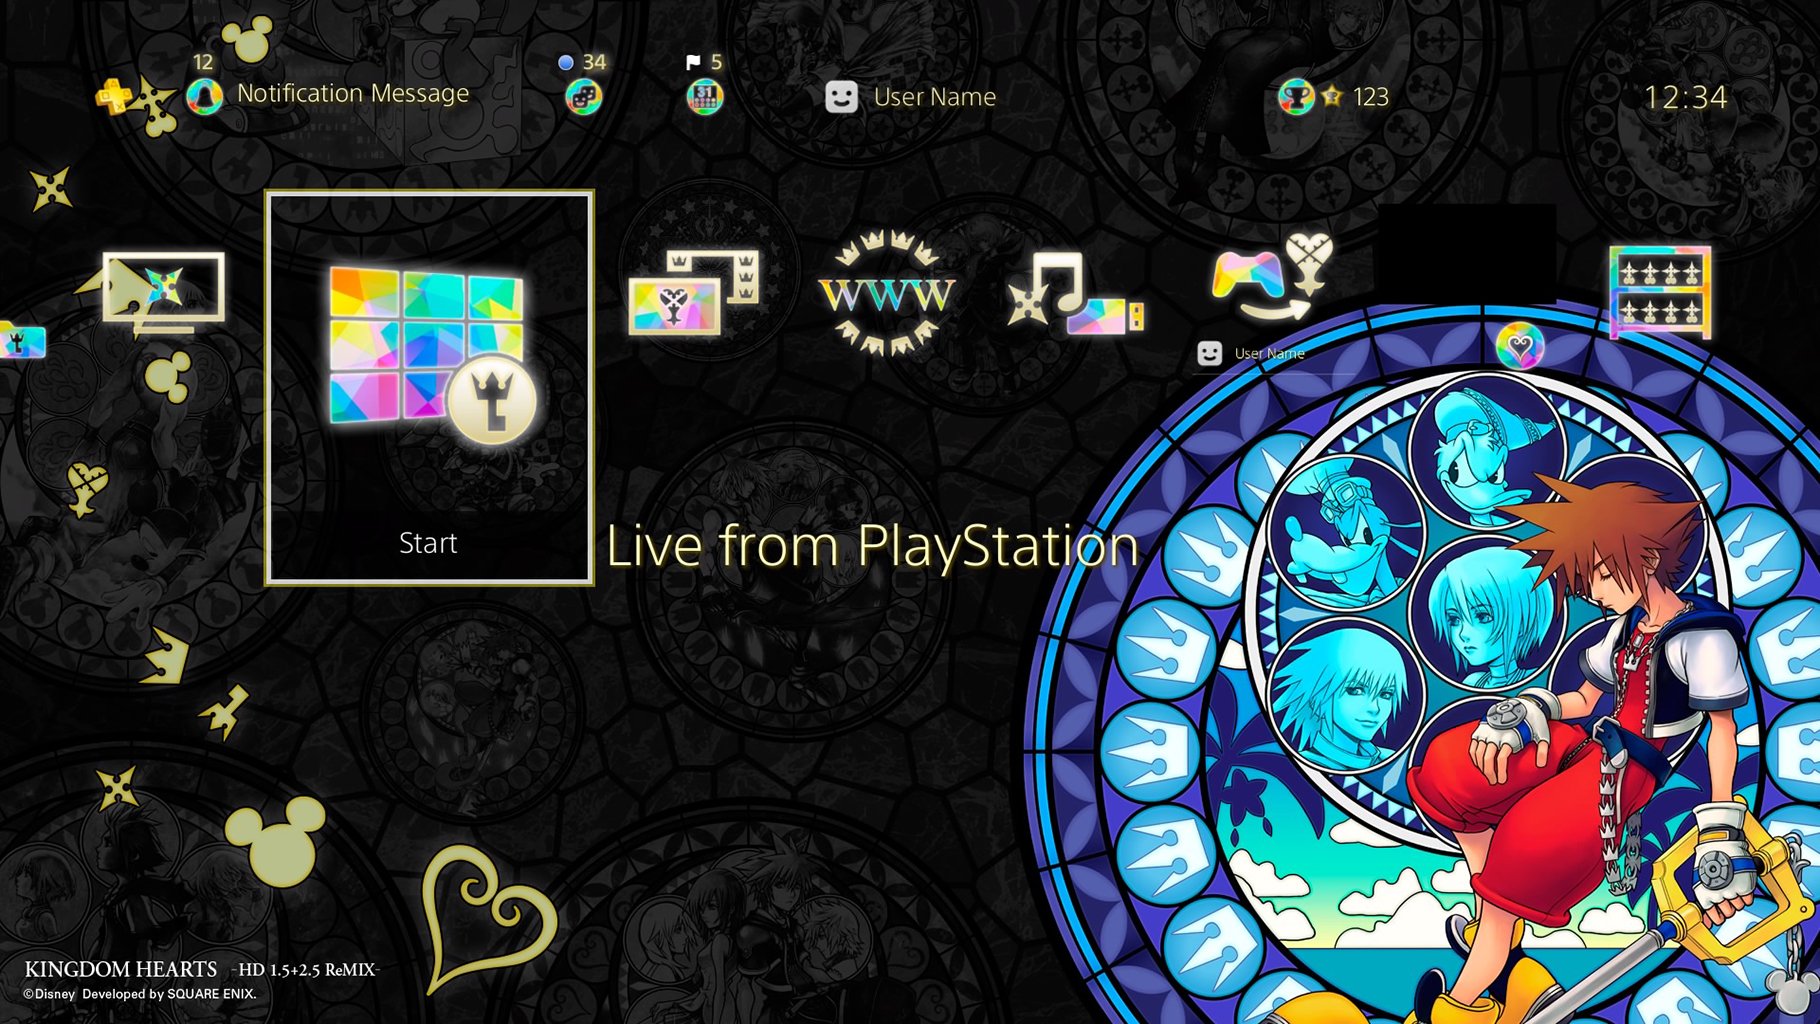 Kingdom Hearts 1.5 + 2.5 PS4 Theme 02